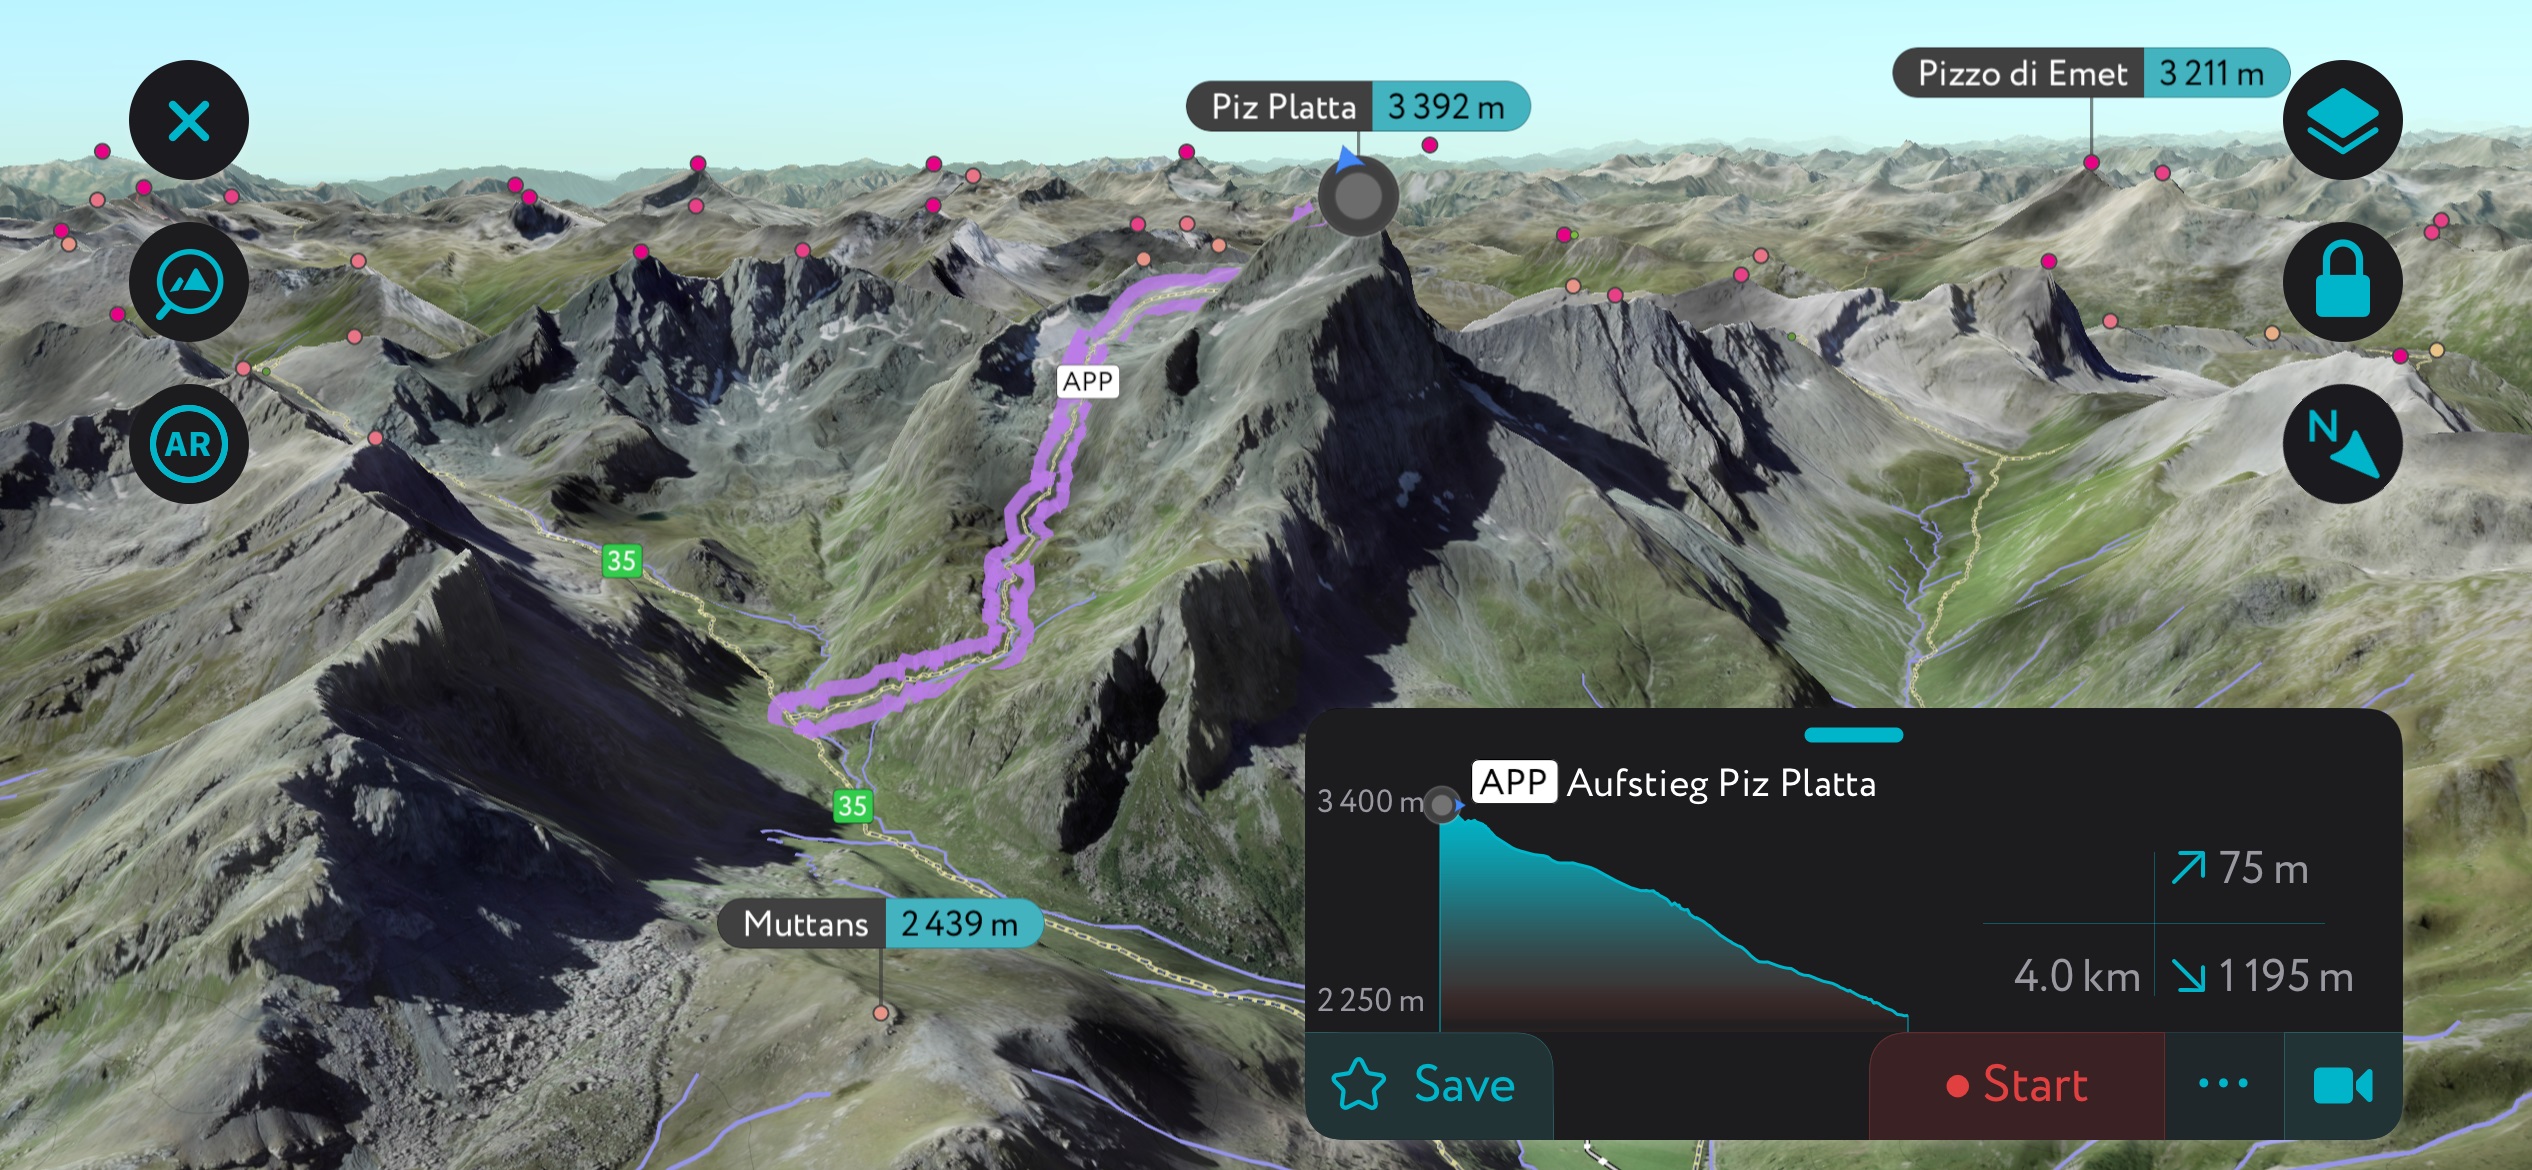 A generation of the Piz Plata standard route using PeakVisor’s mobile app. Oberhalbstein Alps